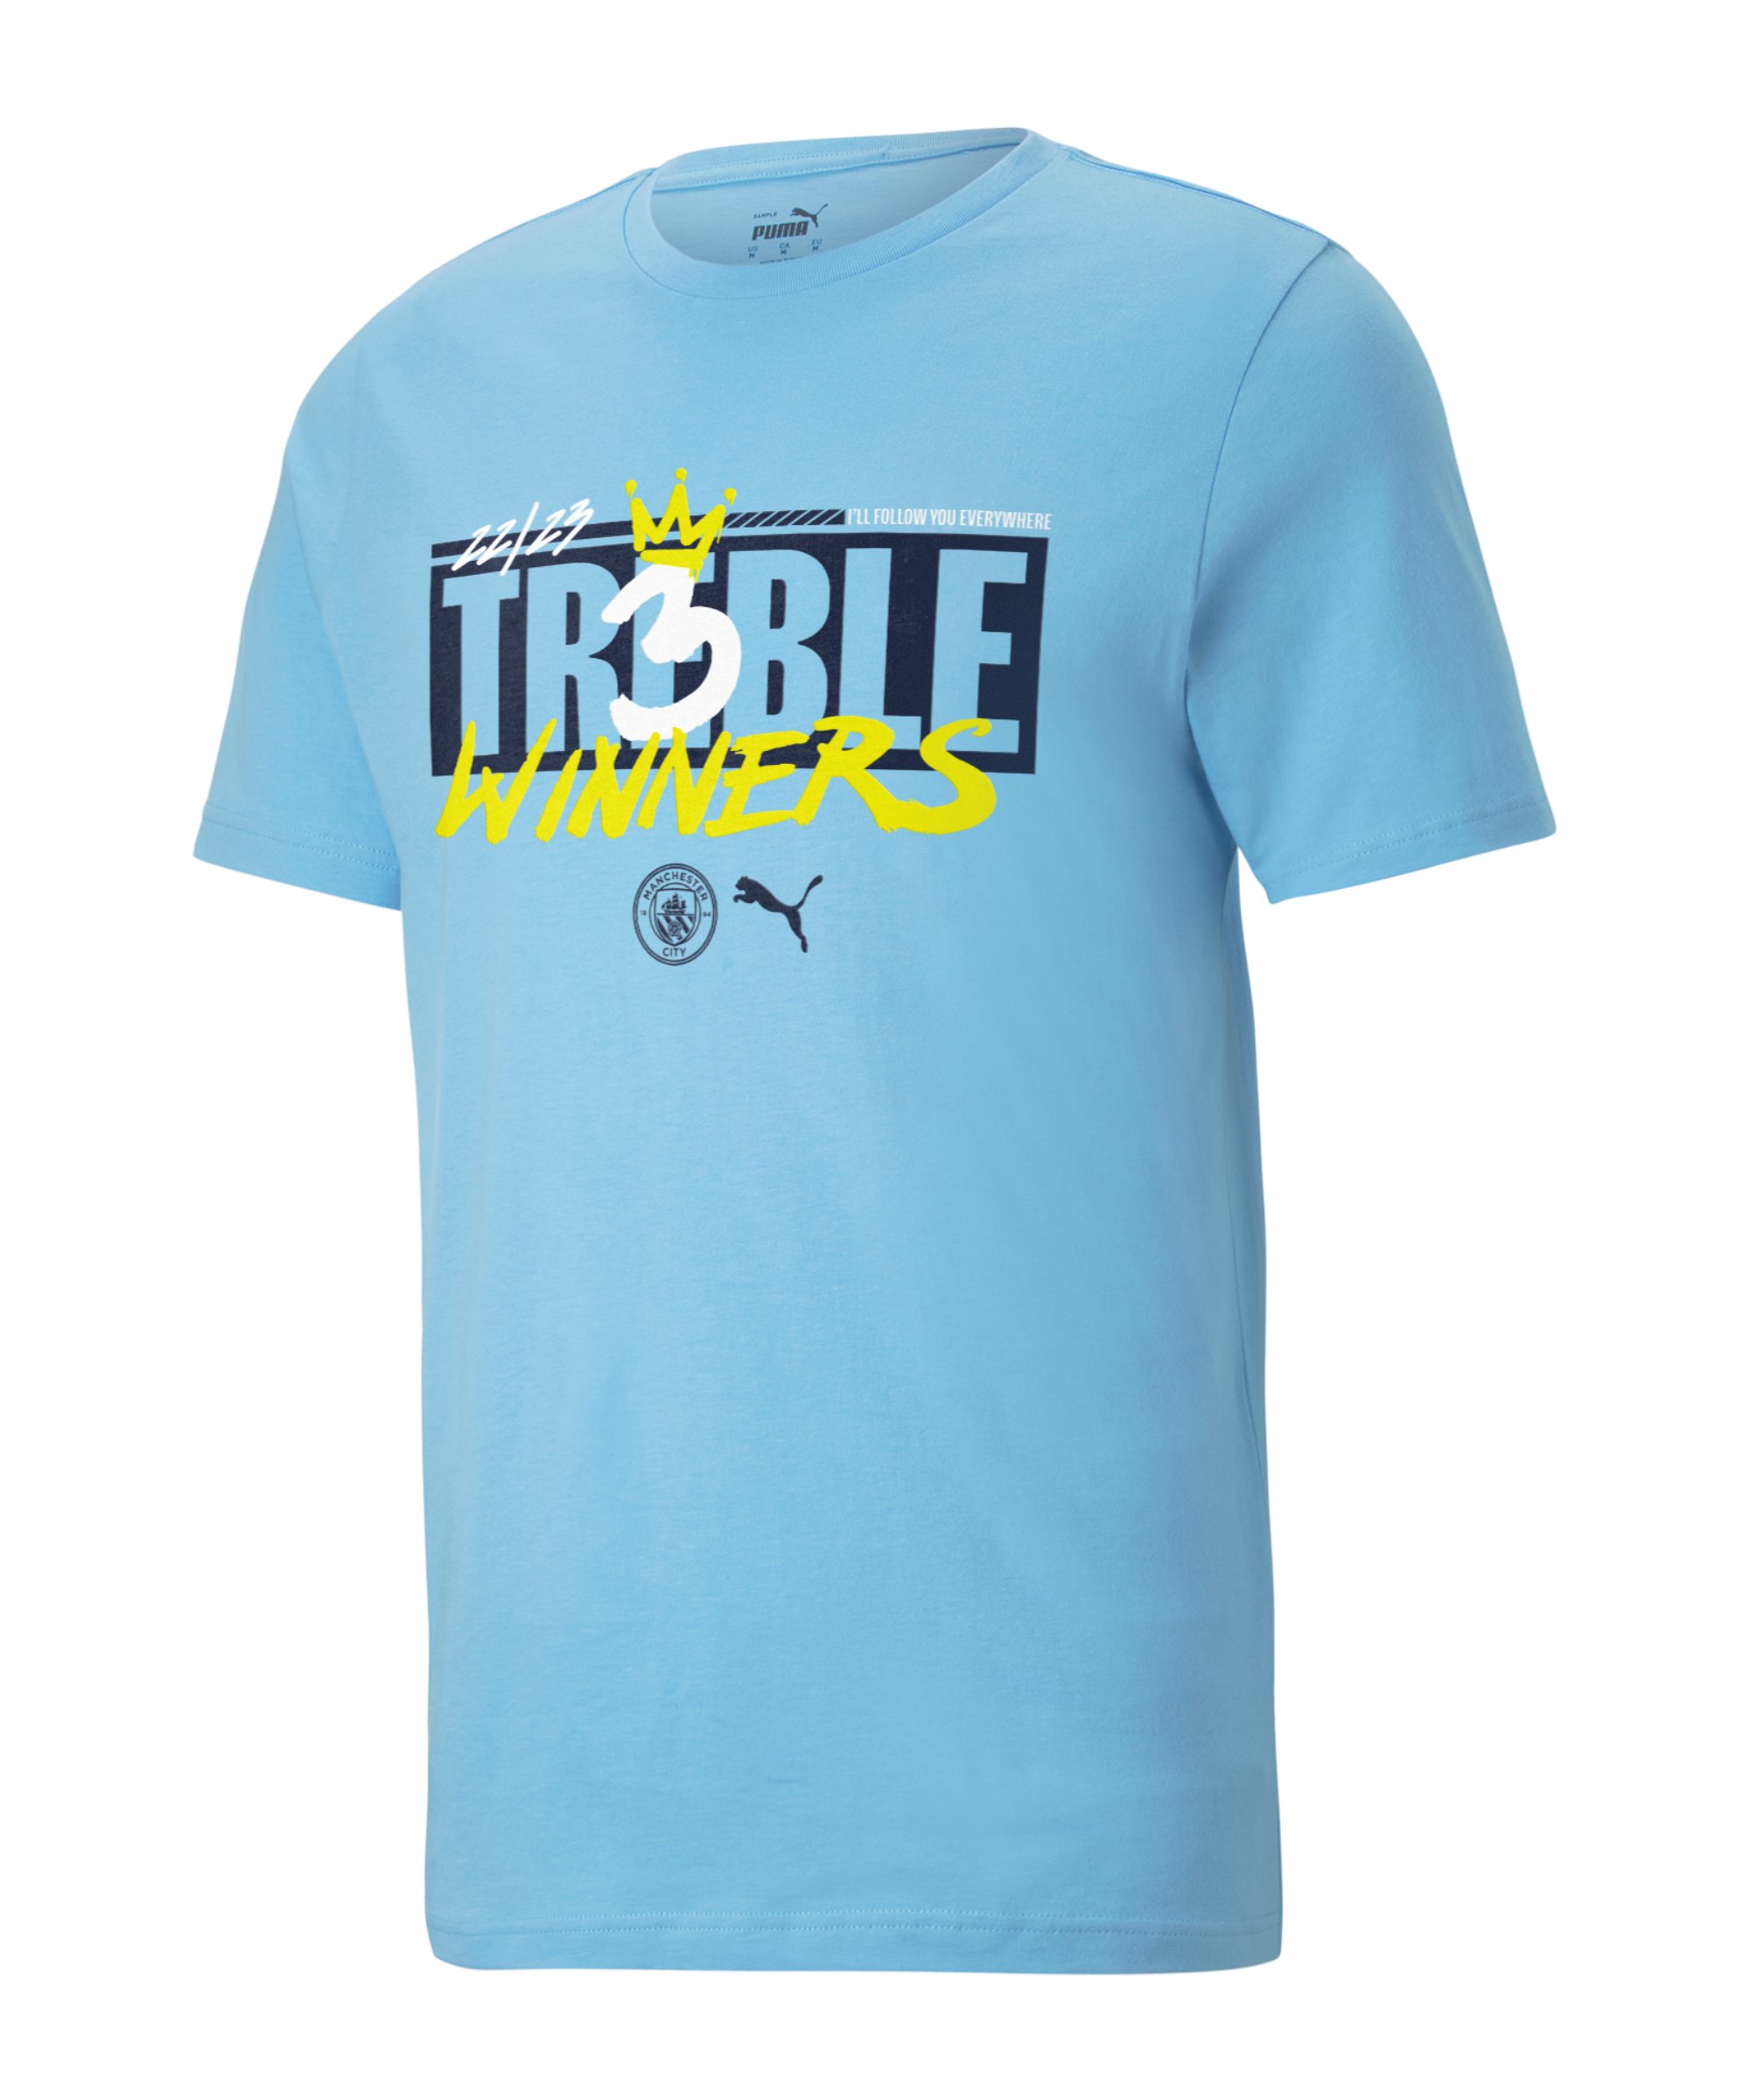 PUMA Manchester City Triple-Sieger T-Shirt Kids Blau F04 - blau